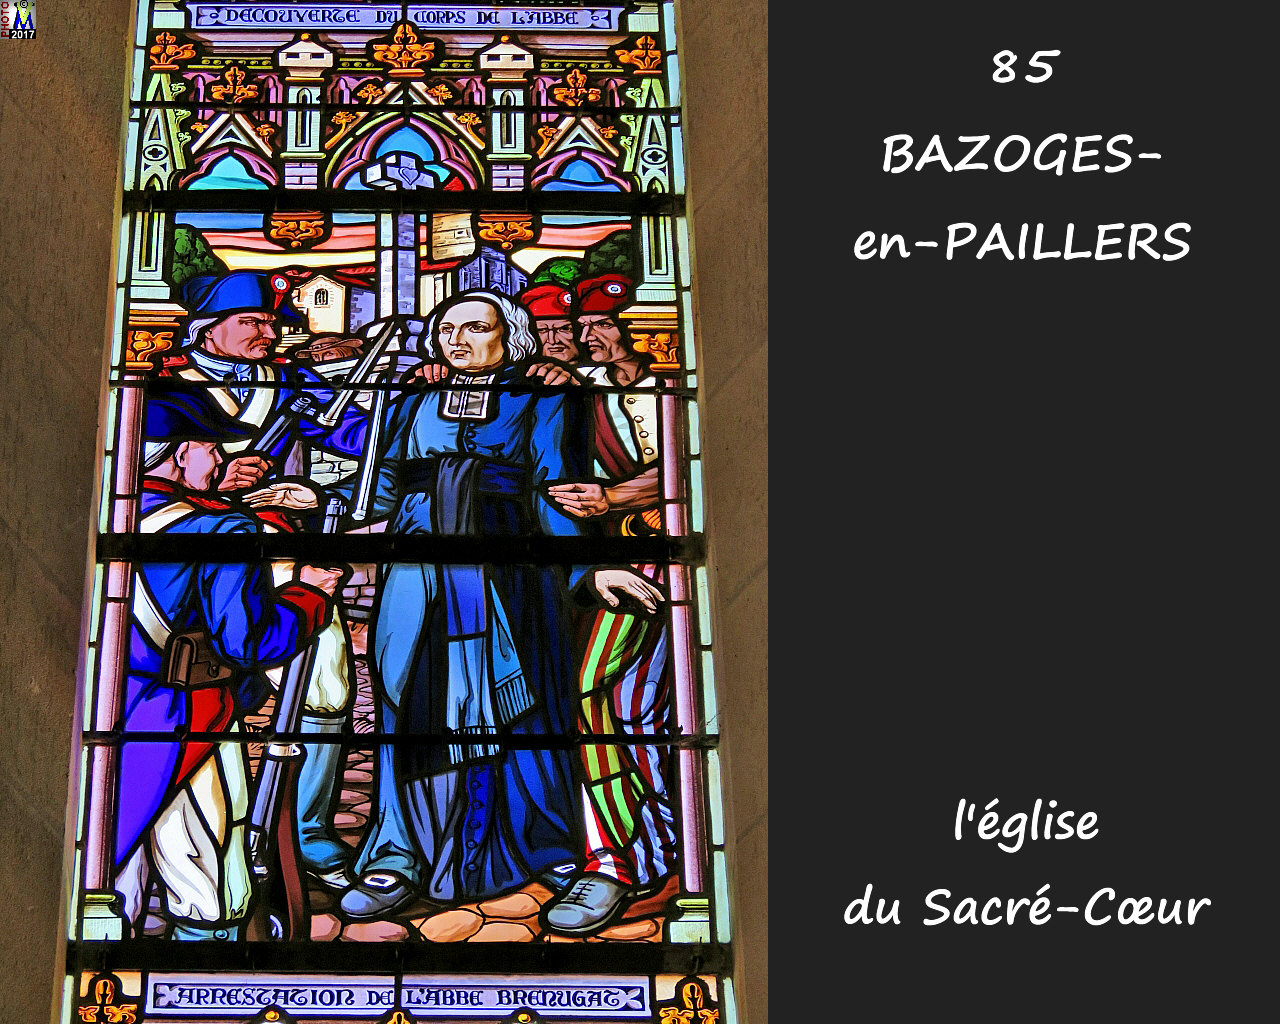 85BAZOGES-PAILLERS_eglise_228.jpg